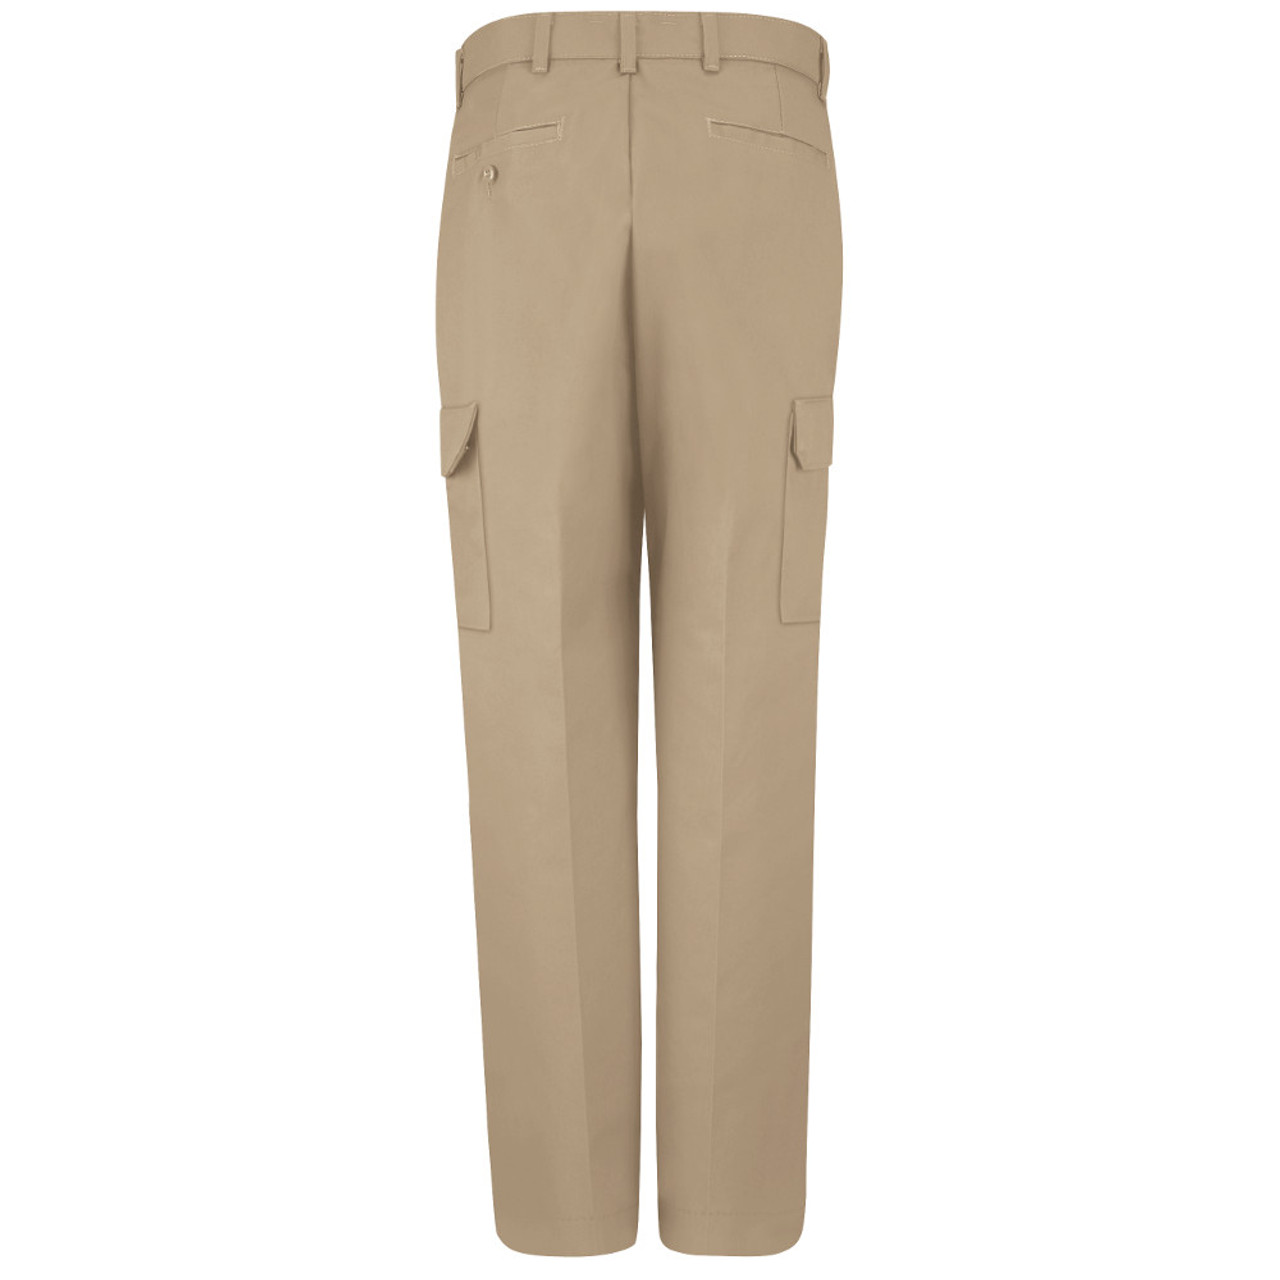 Red Kap Cargo Pants Men’s PT88 Black Work Industrial Durable Size 38x32 